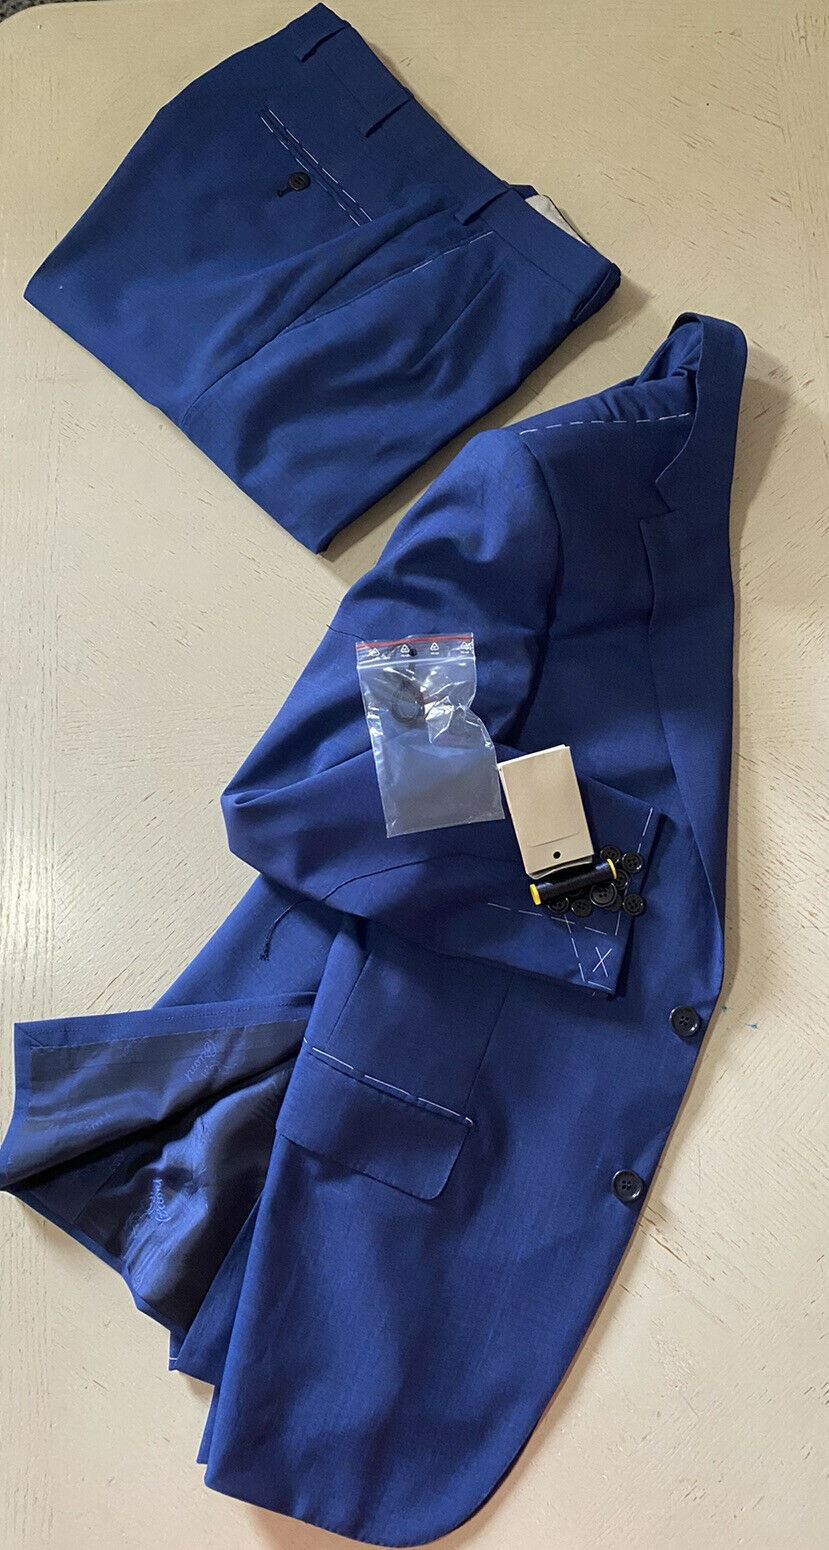 New $5500 Brioni Men’s Classic Wool Suit Royal Blue 38R US/48 Eu Italy